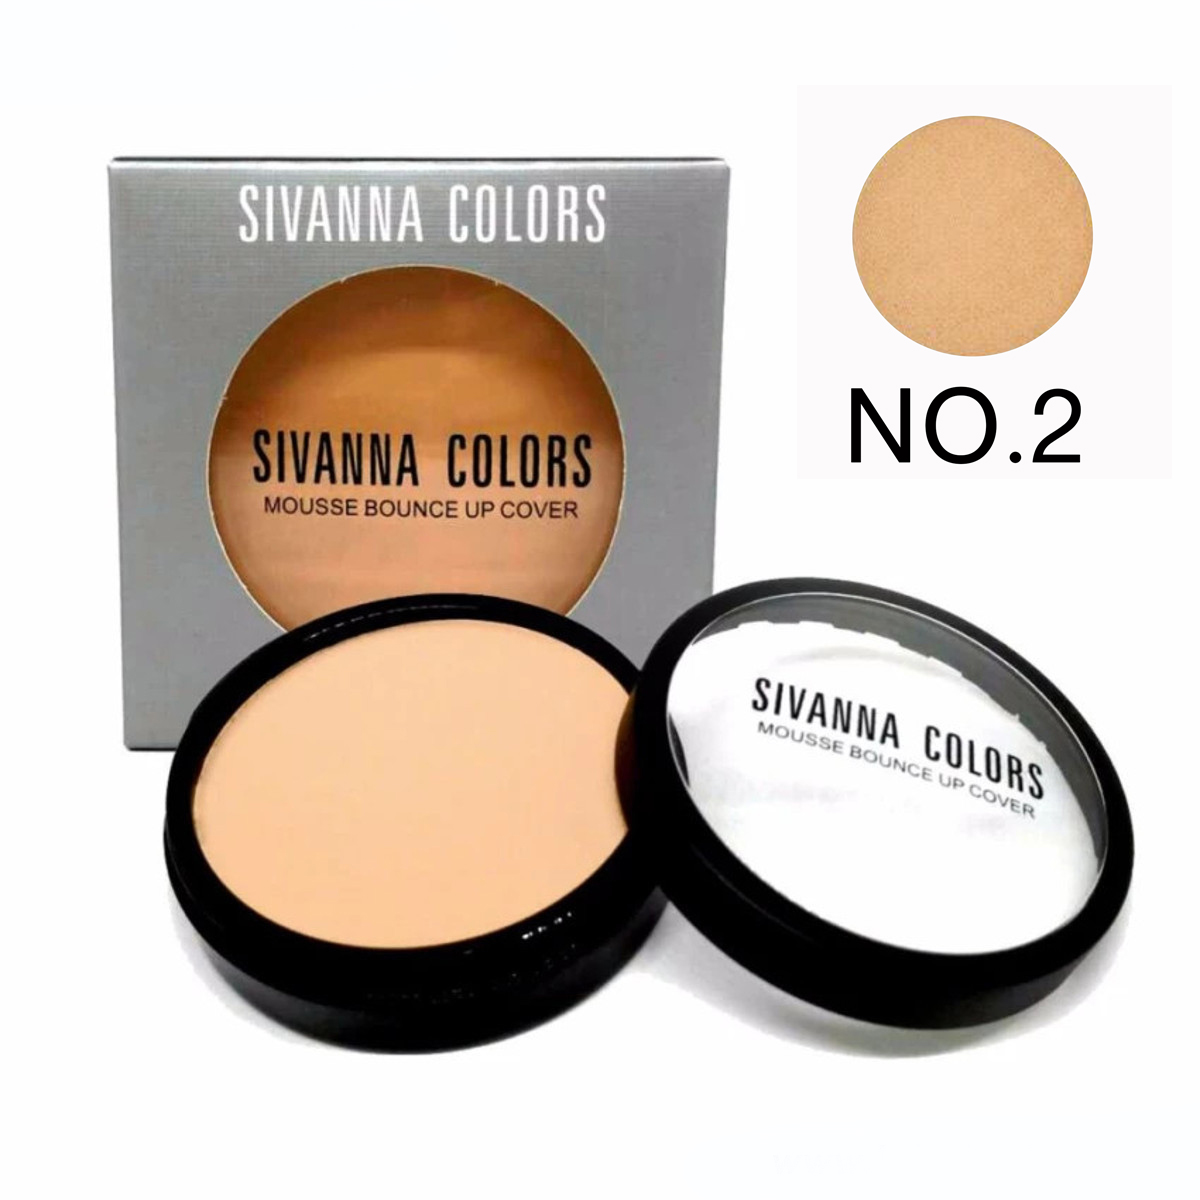 Sivanna Colors รองพื้นดินน้ำมัน Mousse bounce up cover HF144 No.02 ราคาส่งถูกๆ W.57 รหัส F213